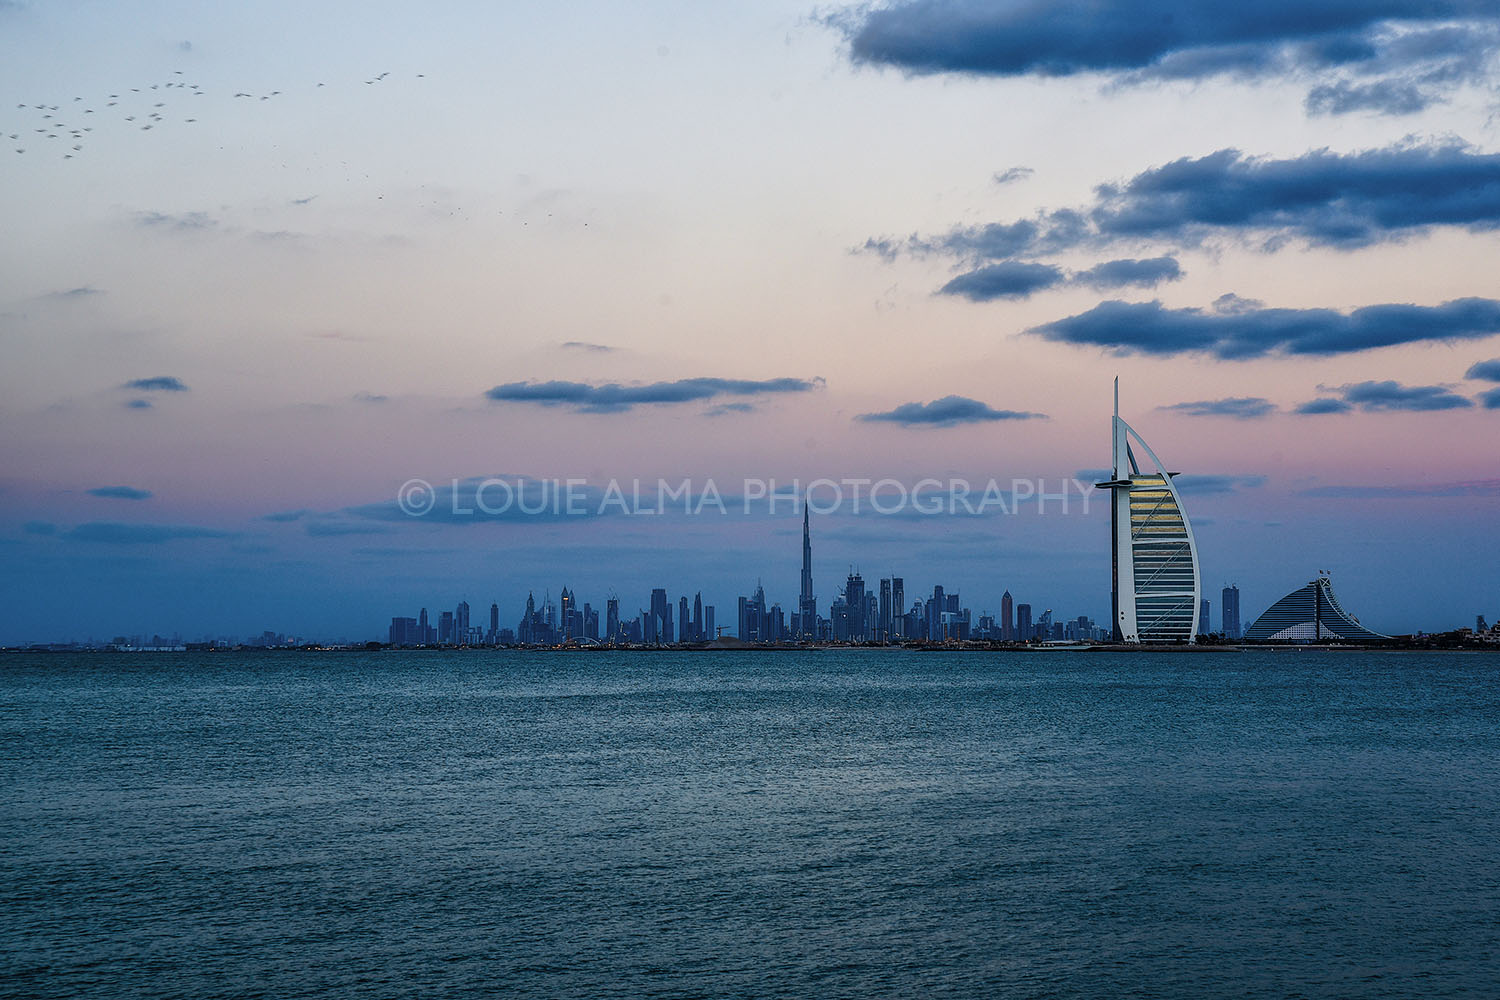 Louie Alma - Landscape Photography, Palm Beach Dubai